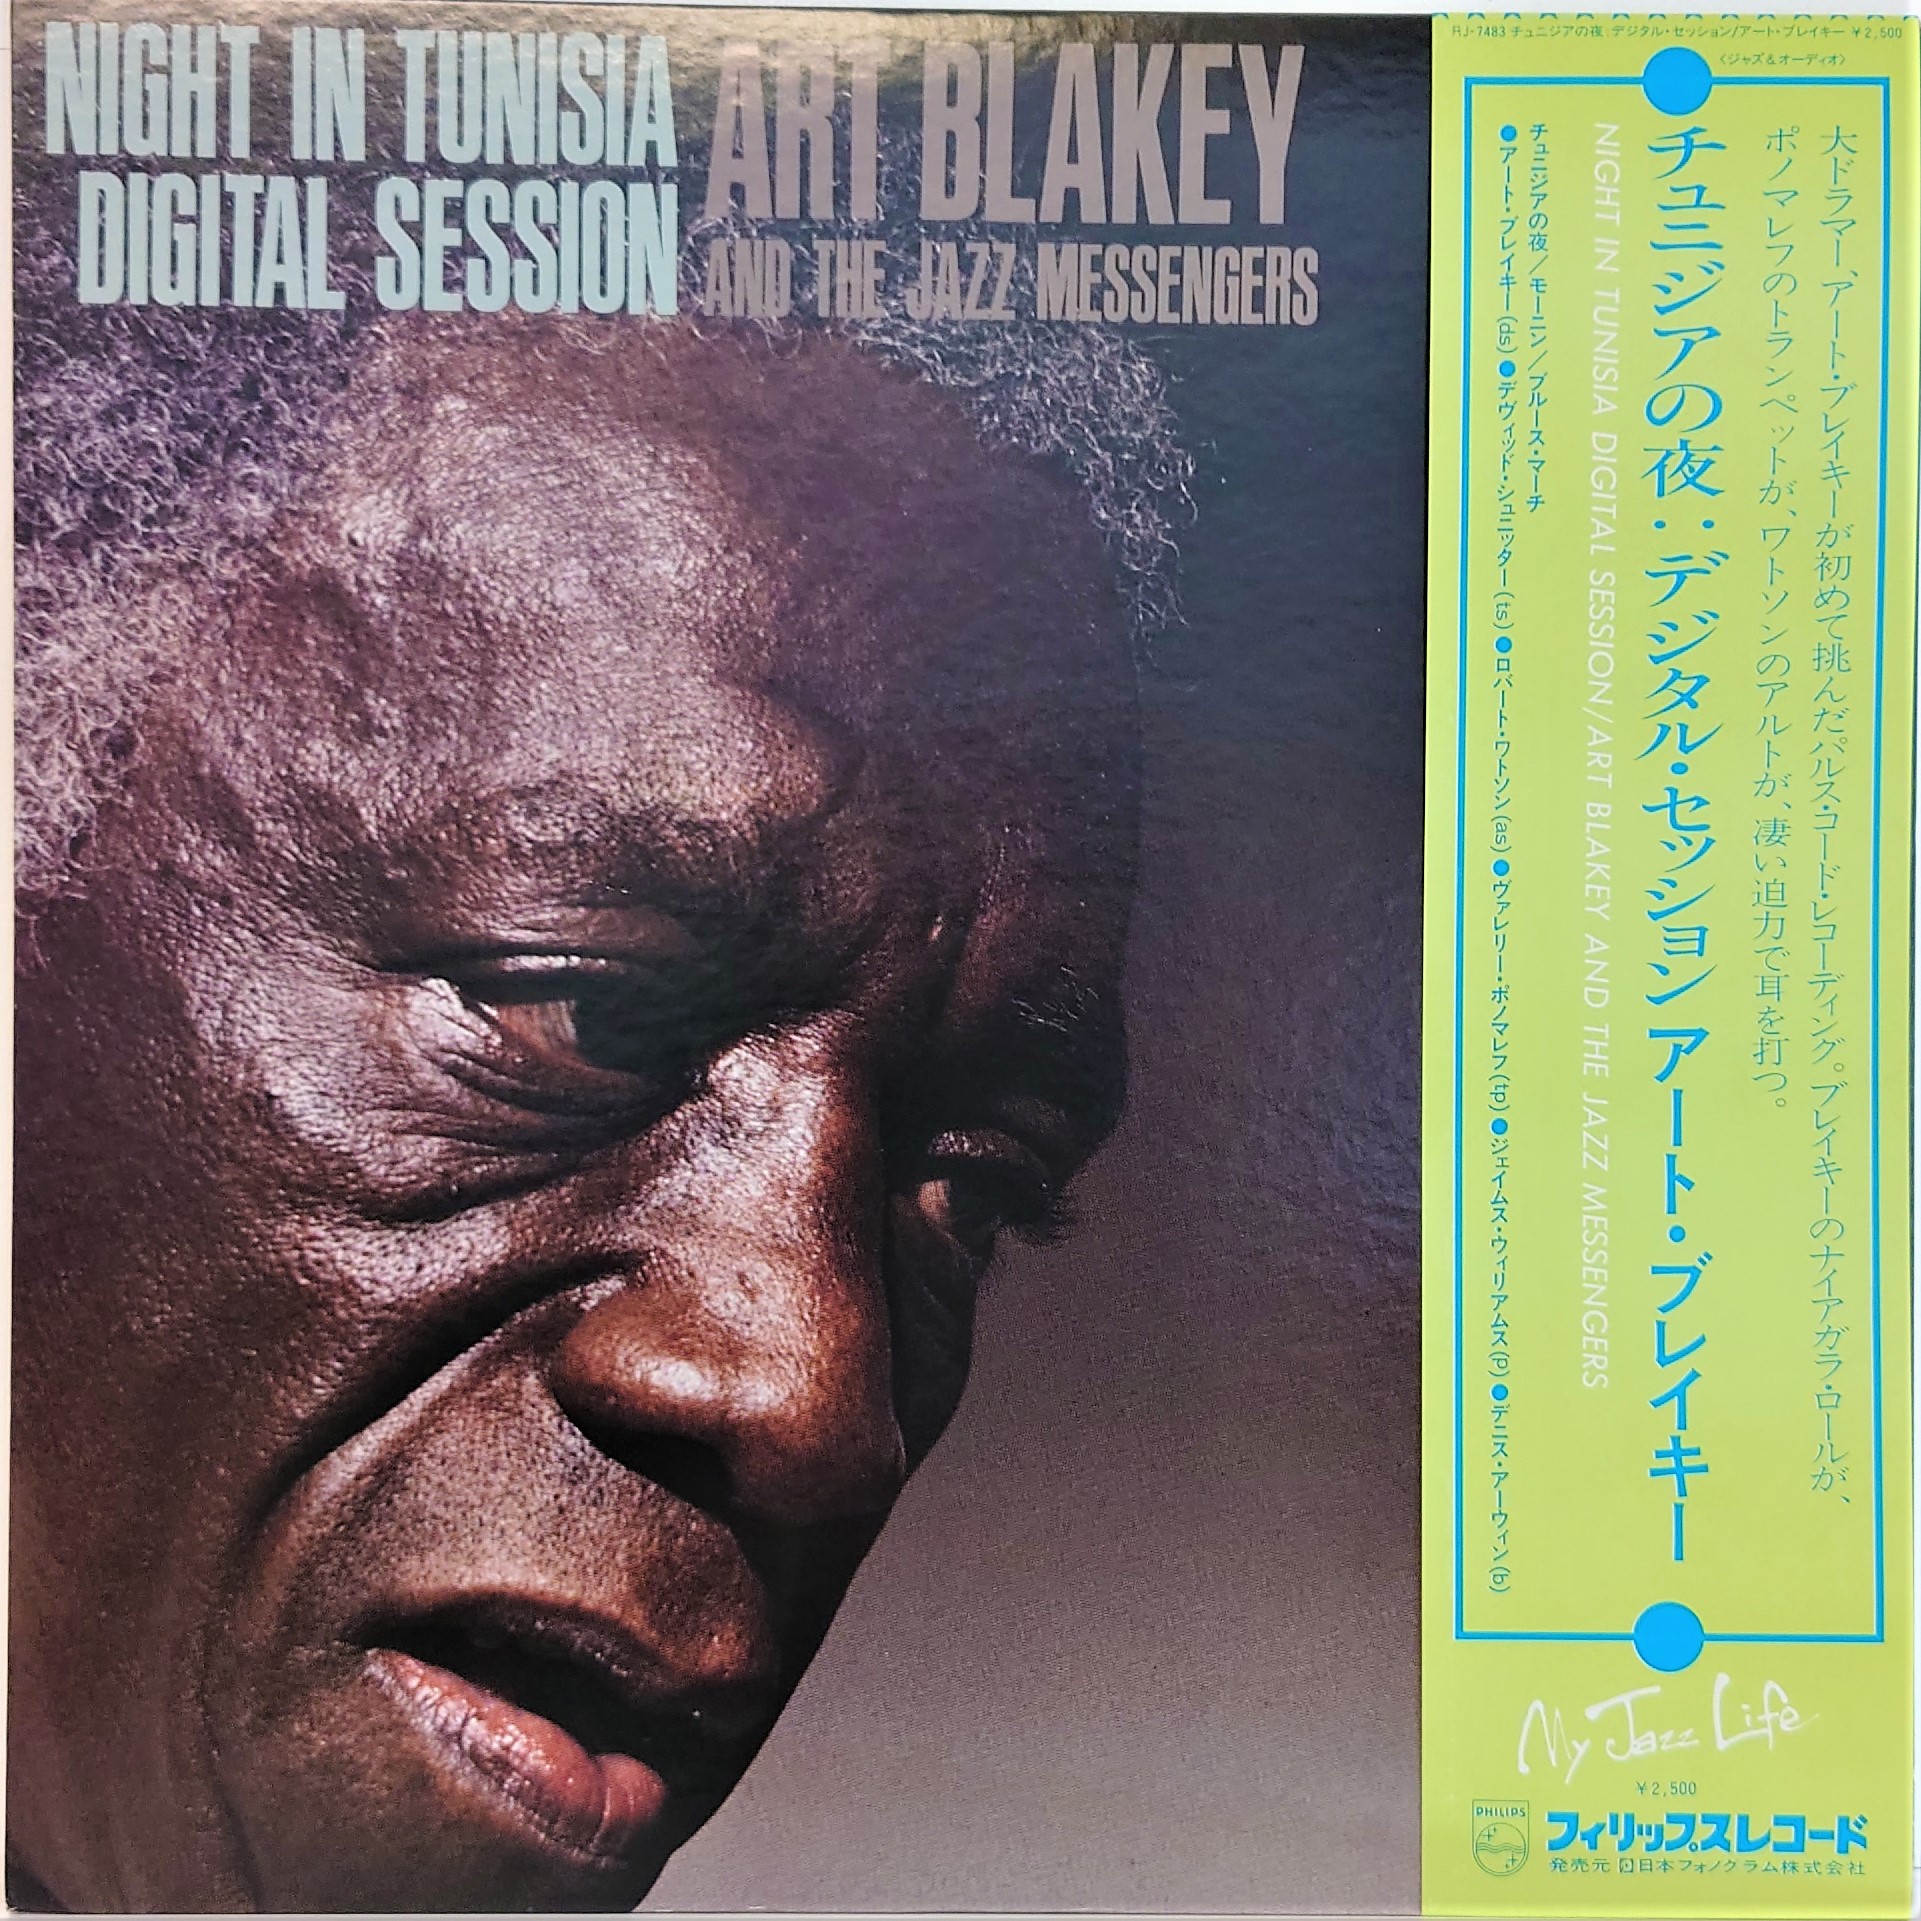 Art Blakey & The Jazz Messengers ‎– Night In Tunisia - Digital